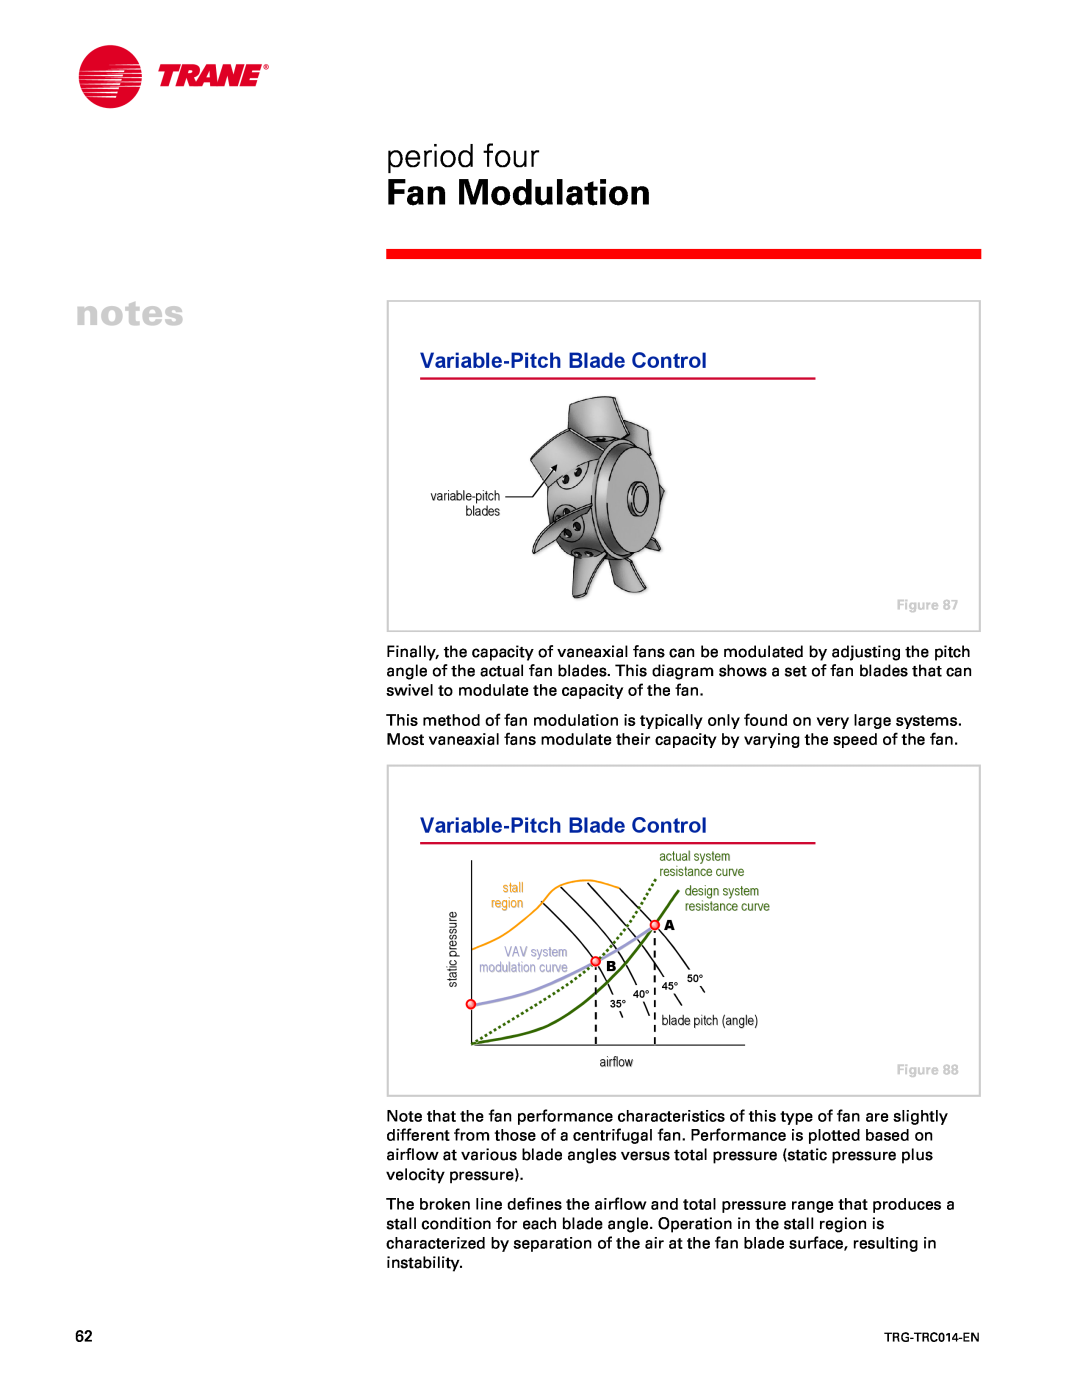 Trane TRG-TRC014-EN manual Variable-PitchBlade Control, Fan Modulation, period four 